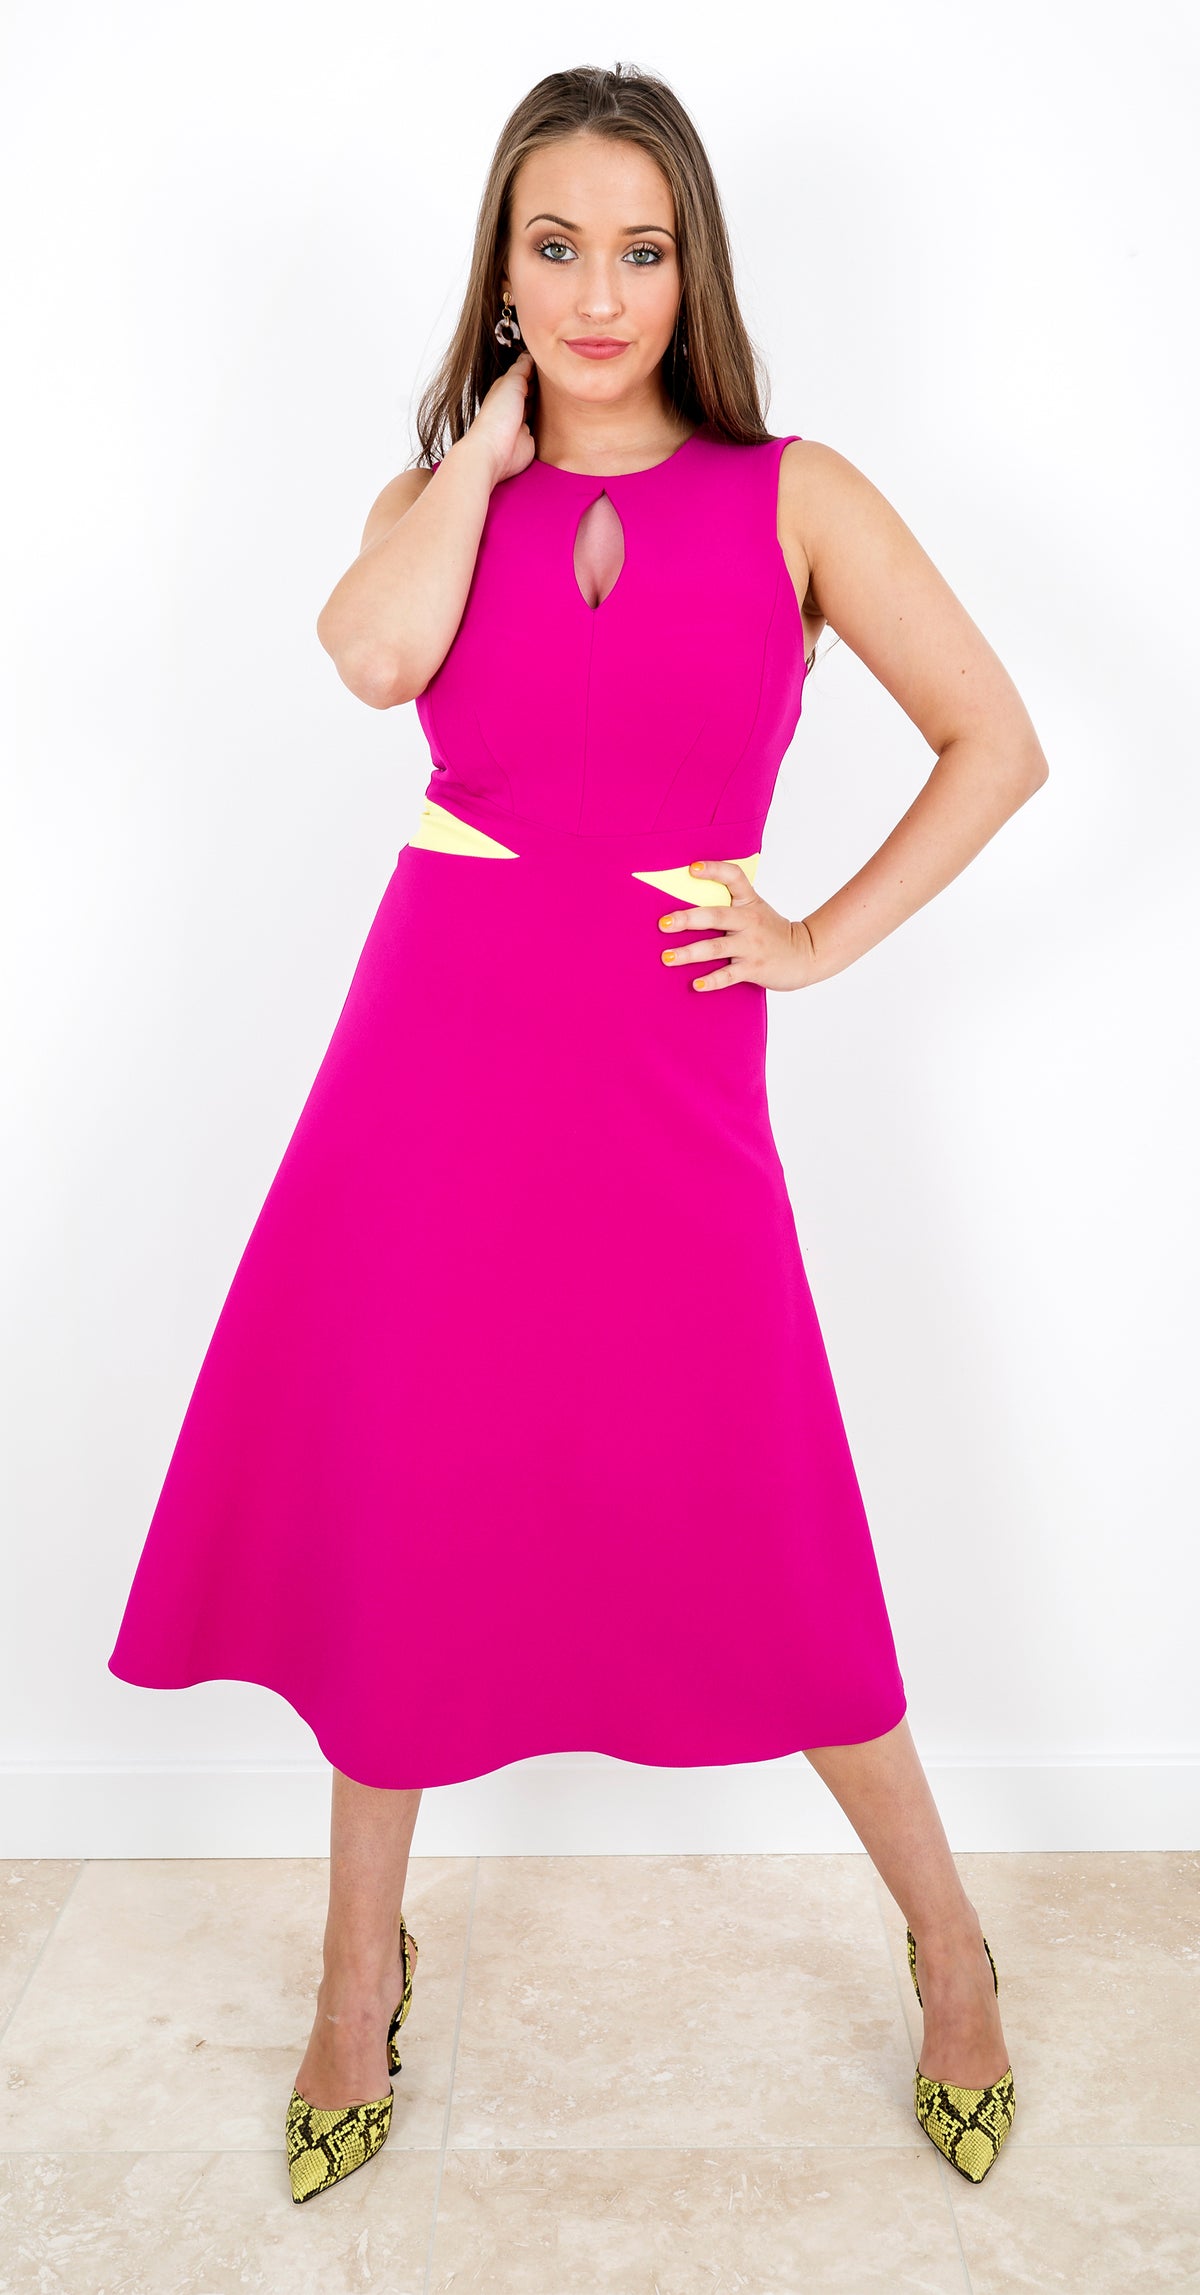 Claudette Dress DRC293 Raspberry Pink/Yellow